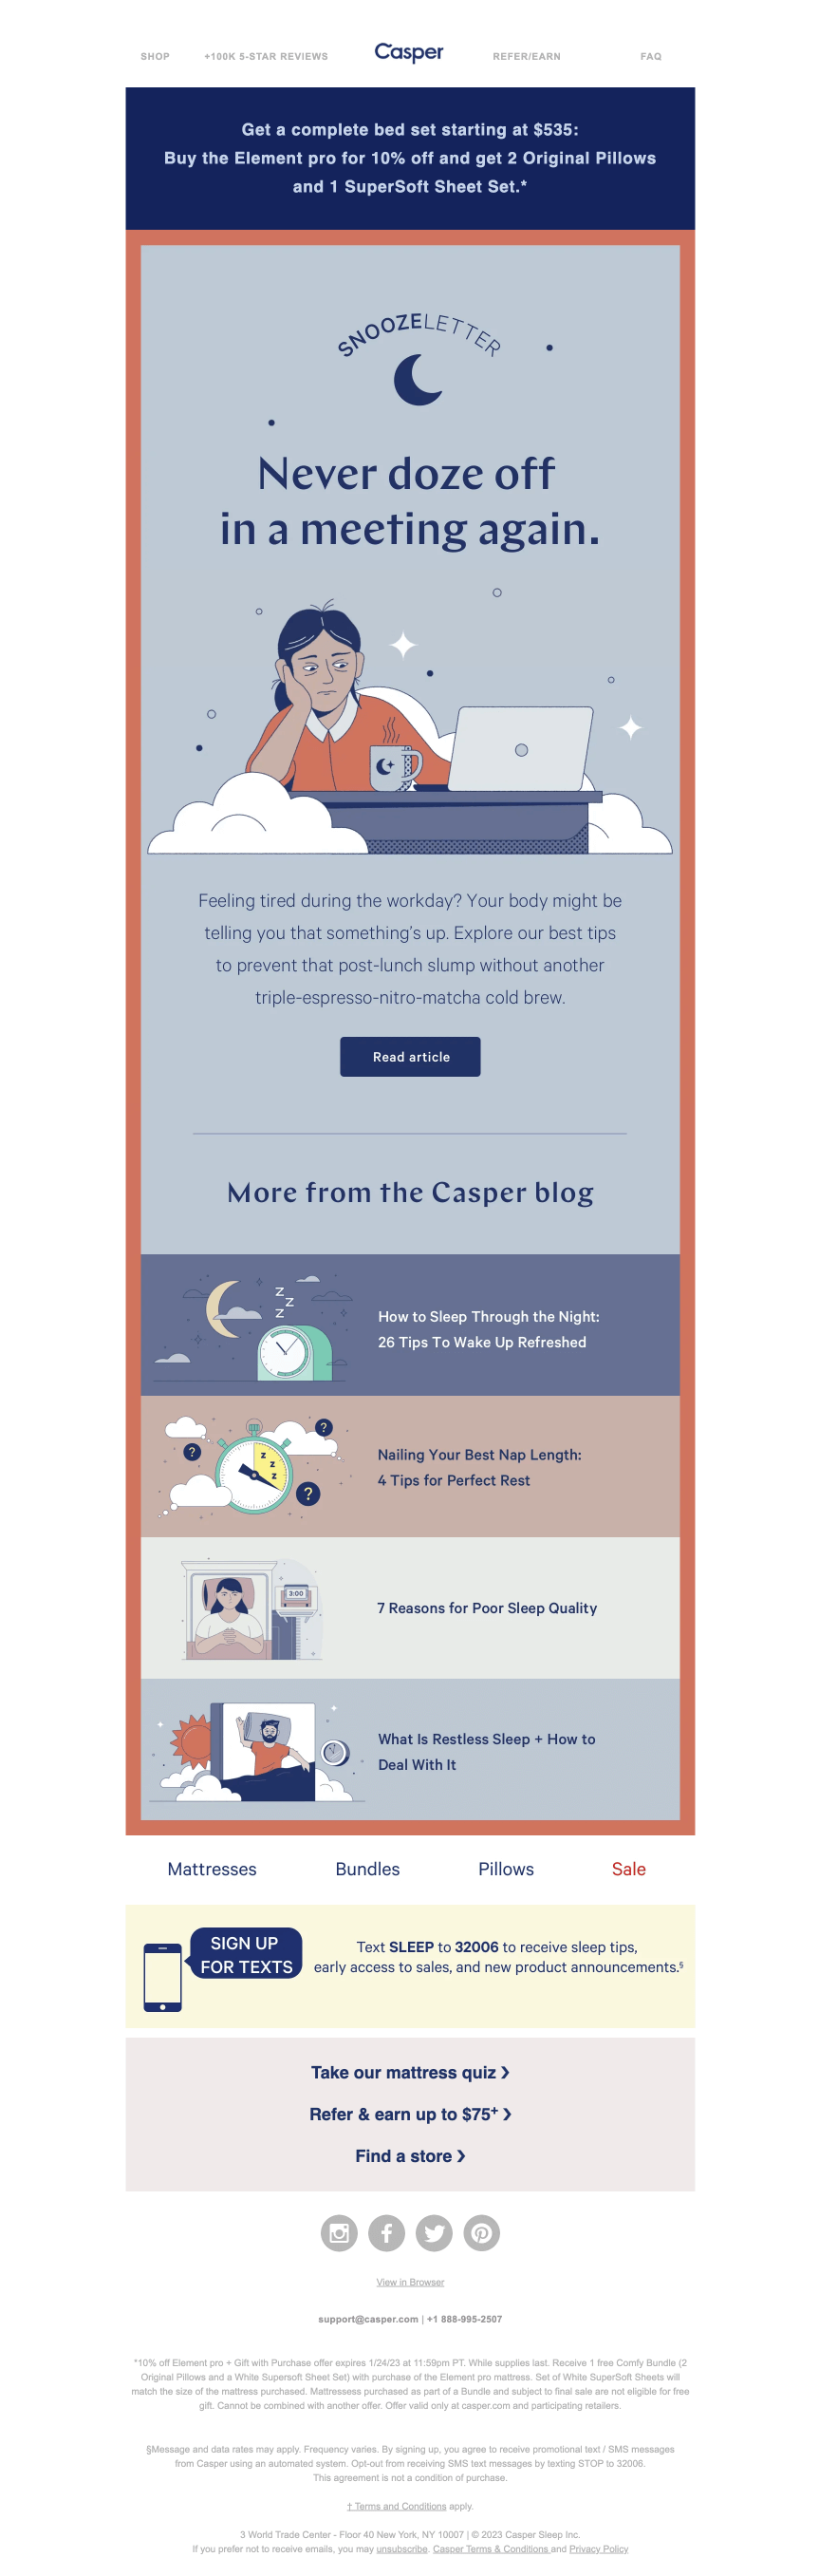 An email from Casper